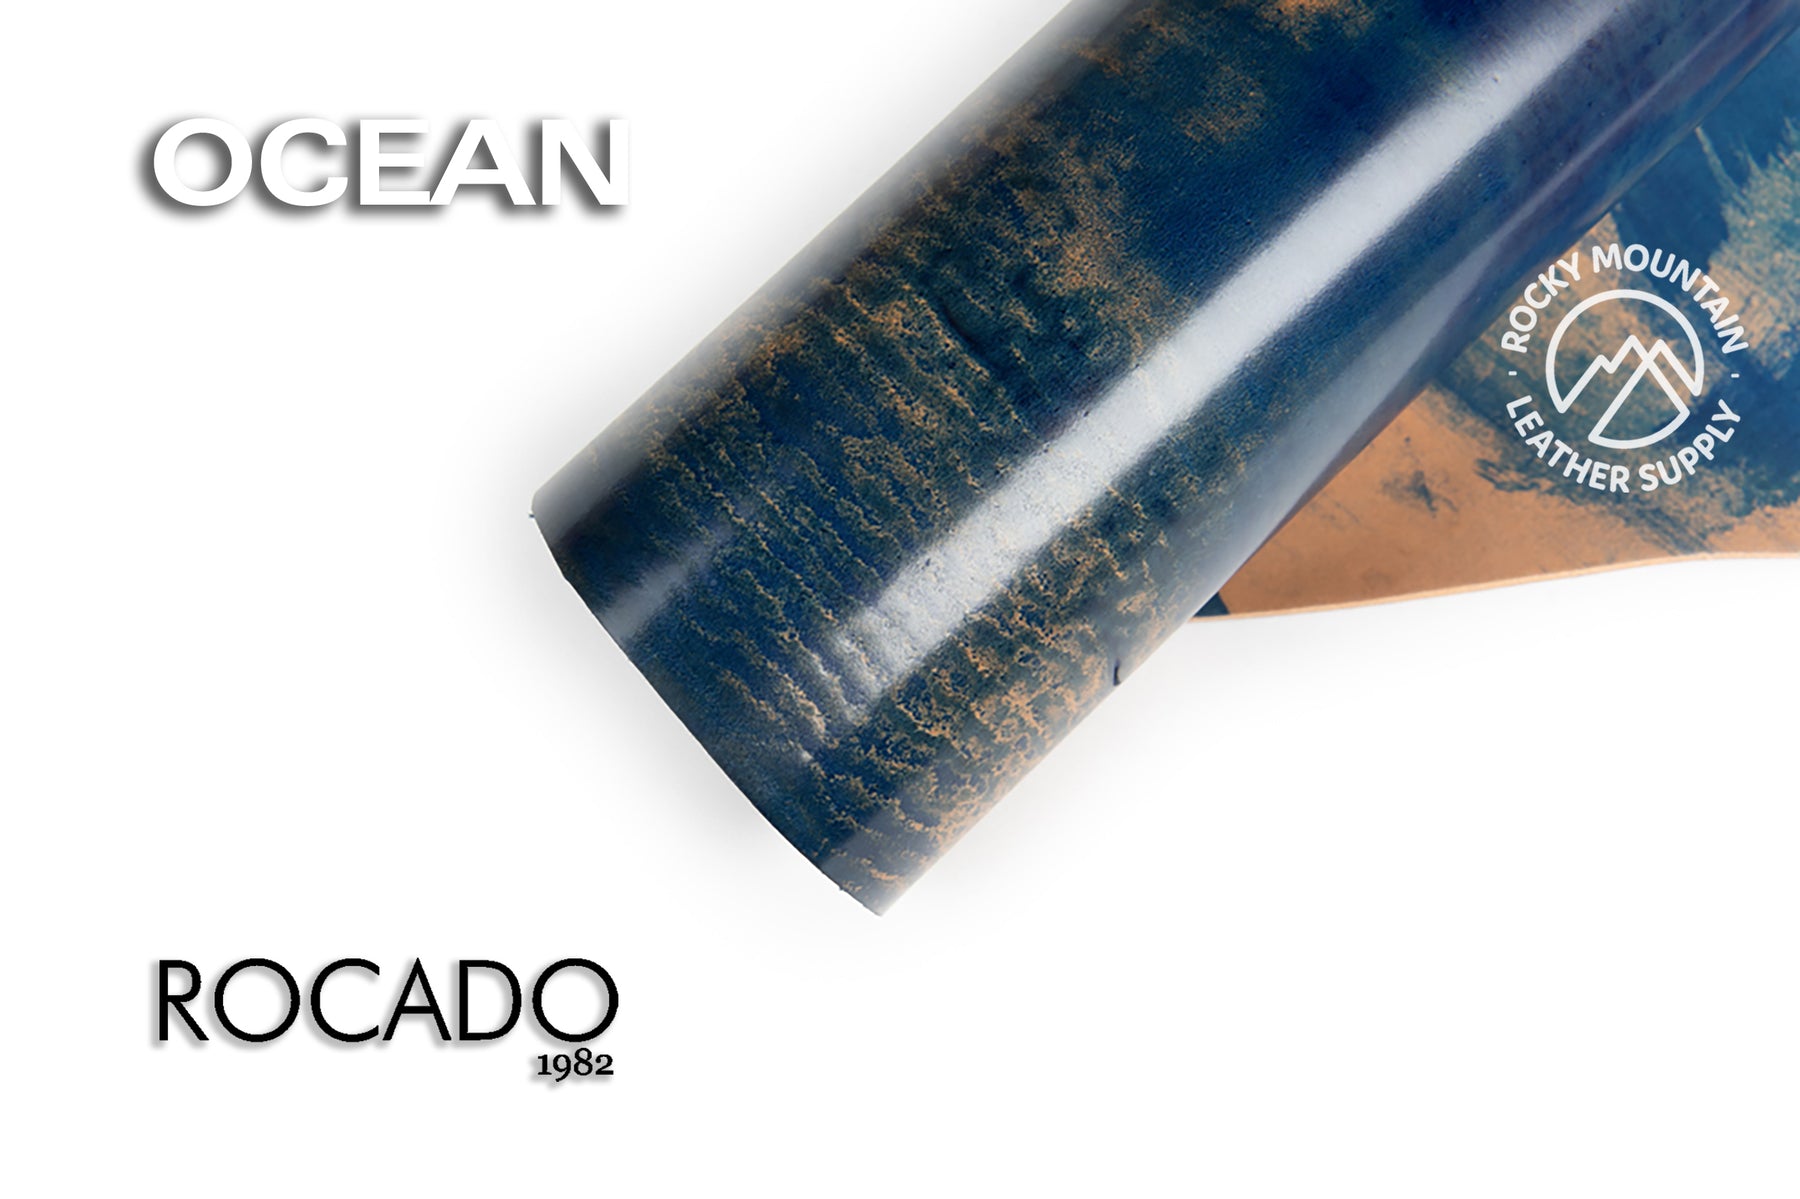 Rocado 🇮🇹 - "Marbled" Shell Cordovan - Veg Tanned (Ocean)